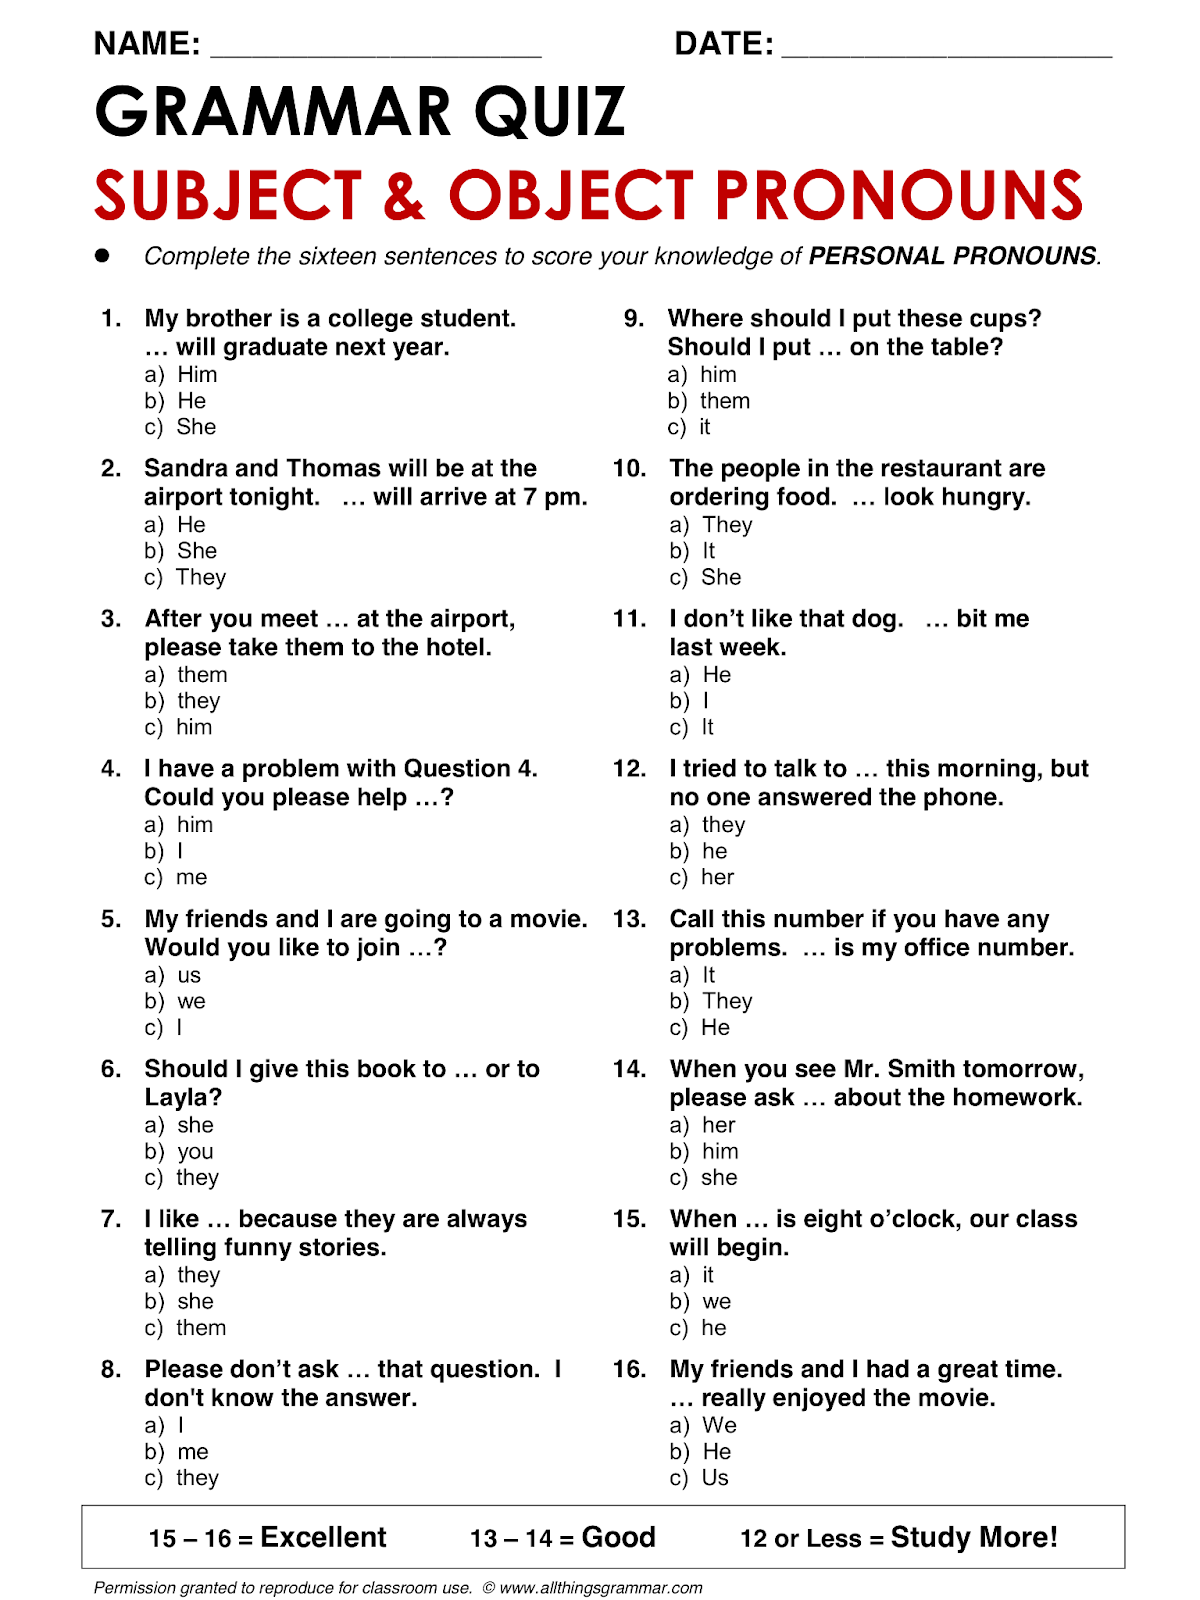 choosing-pronouns-worksheet-pronoun-worksheets-free-pronoun-worksheets-grammar-worksheets